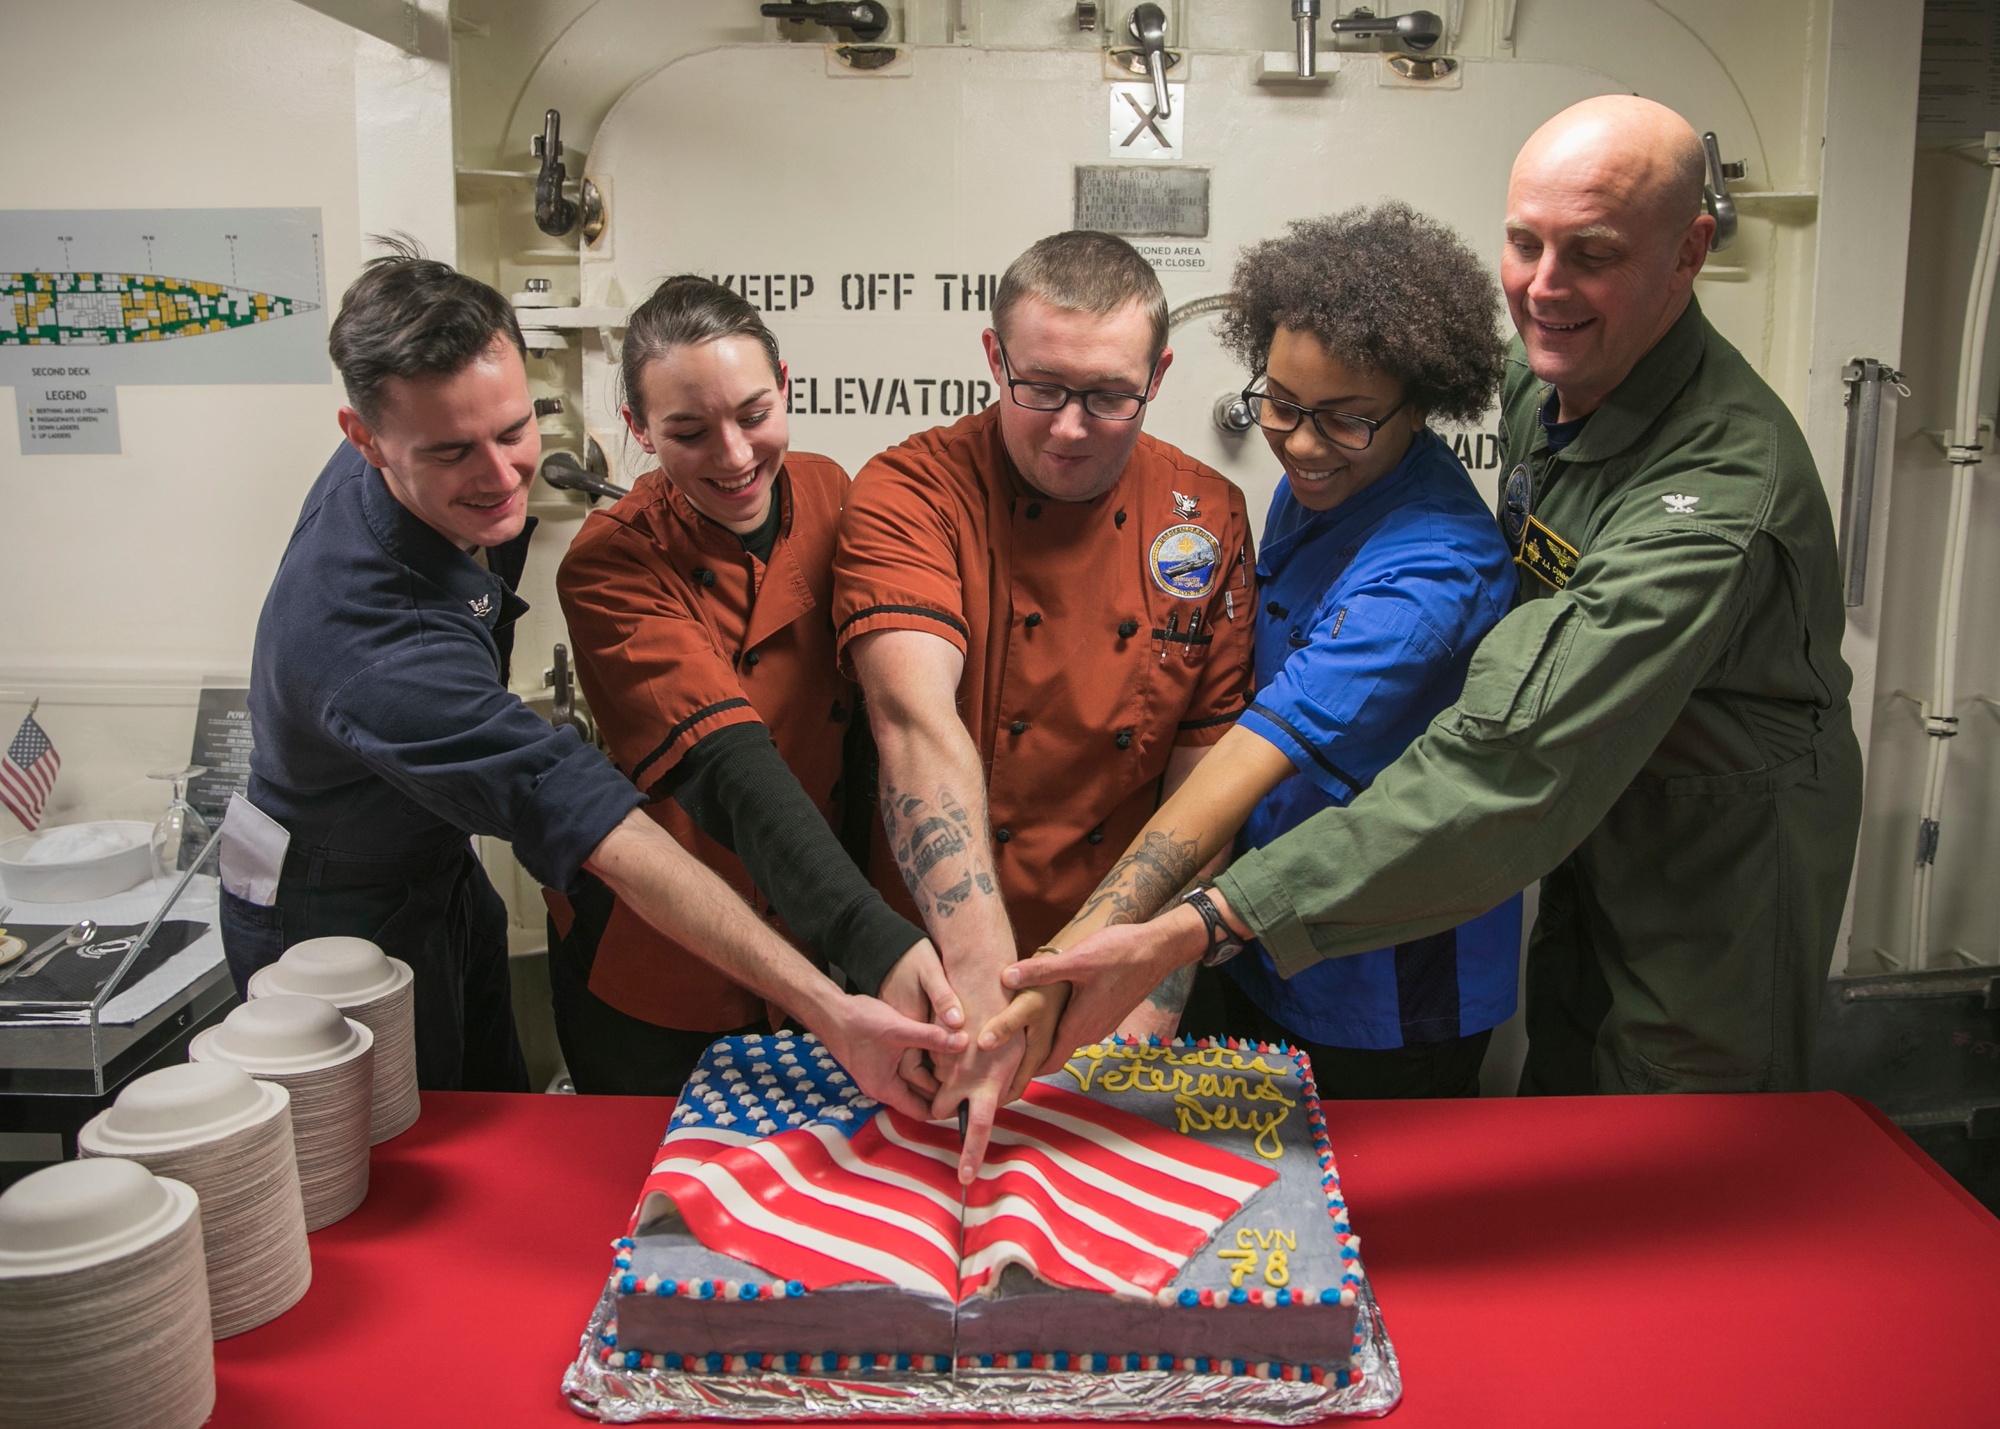 Dulcerella - Custom Cakes and Gourmet Desserts - Happy Veterans Day!🇺🇸 |  Facebook